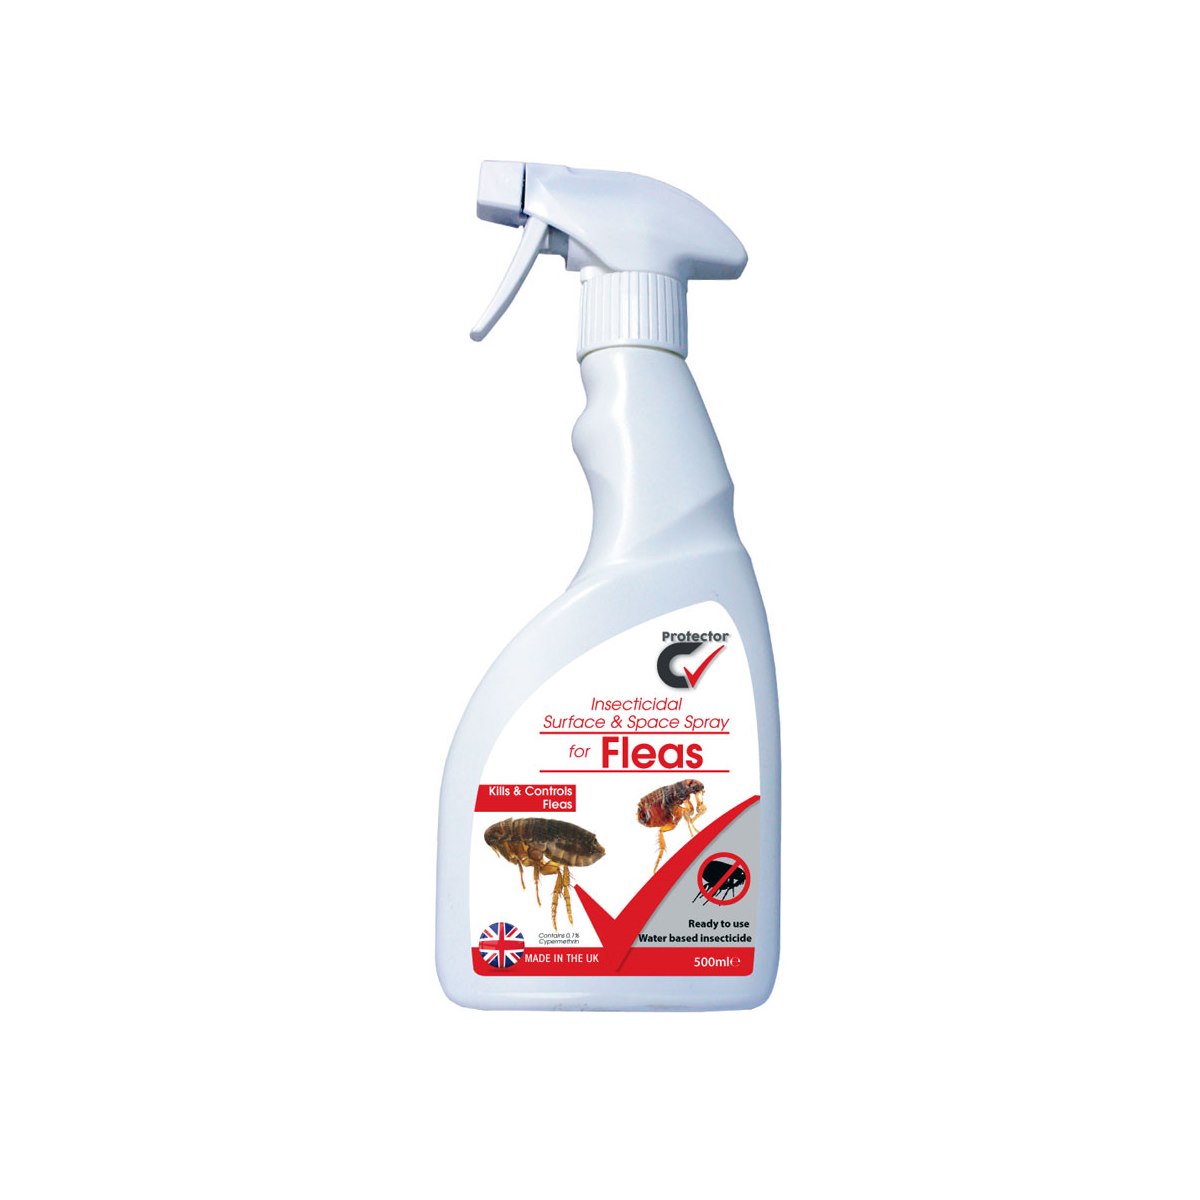 Protector C Insecticidal Spray For Fleas 500ml